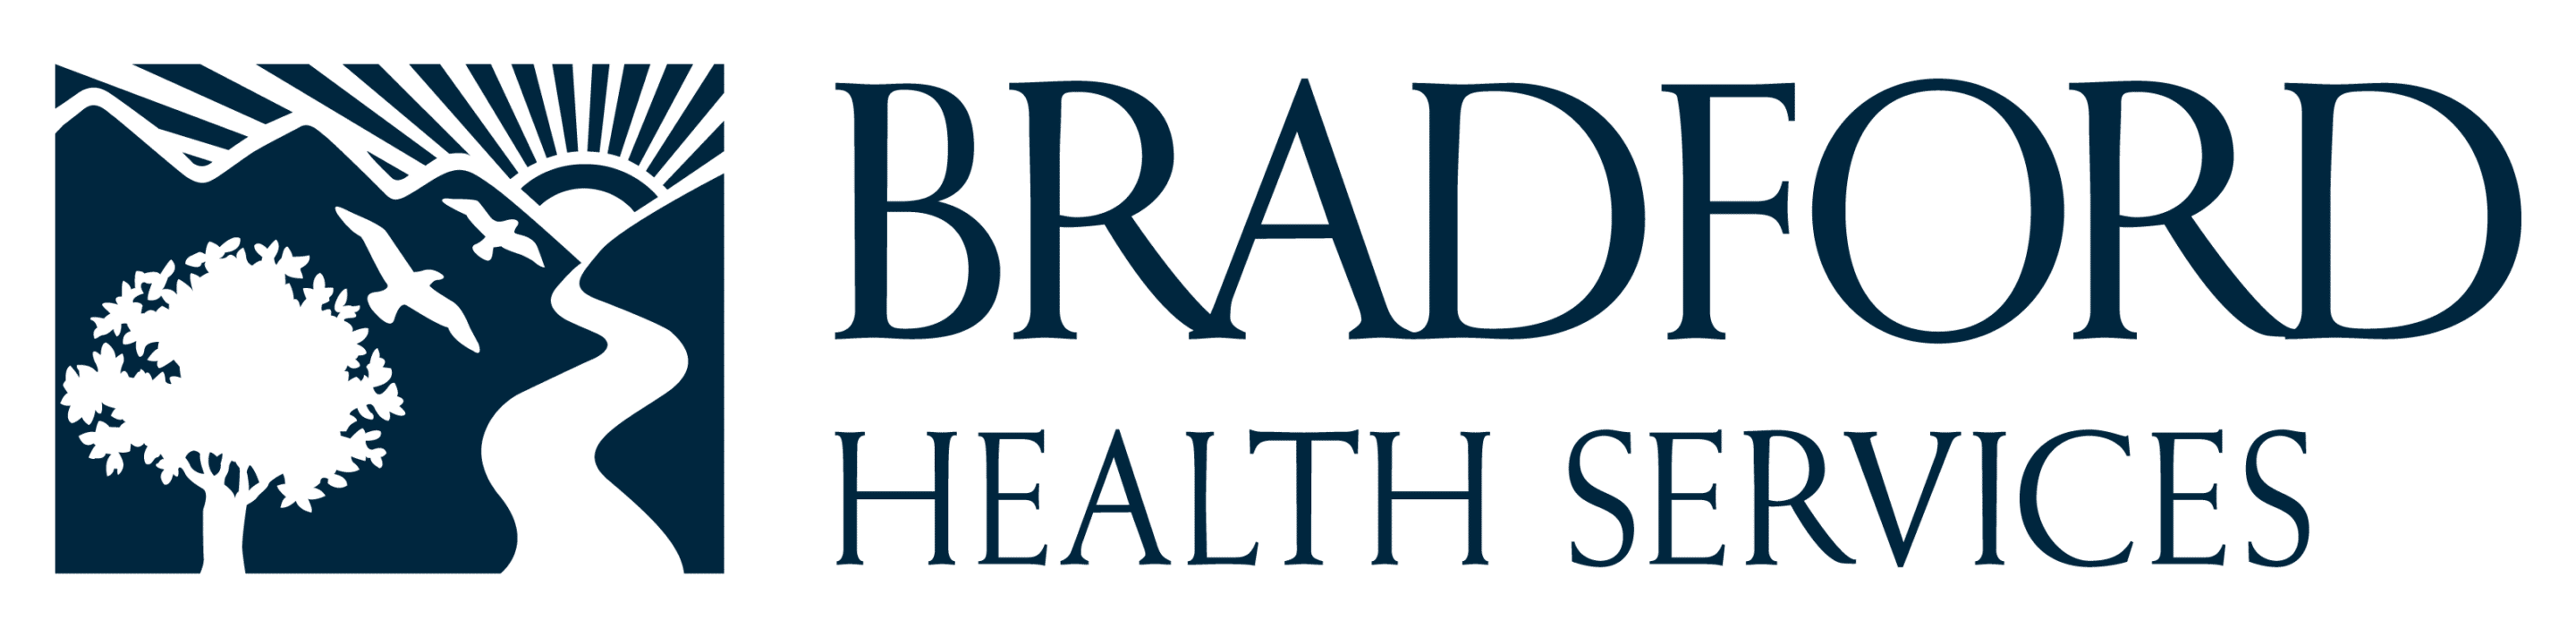 bradford health drug rehab logo horizontal navy